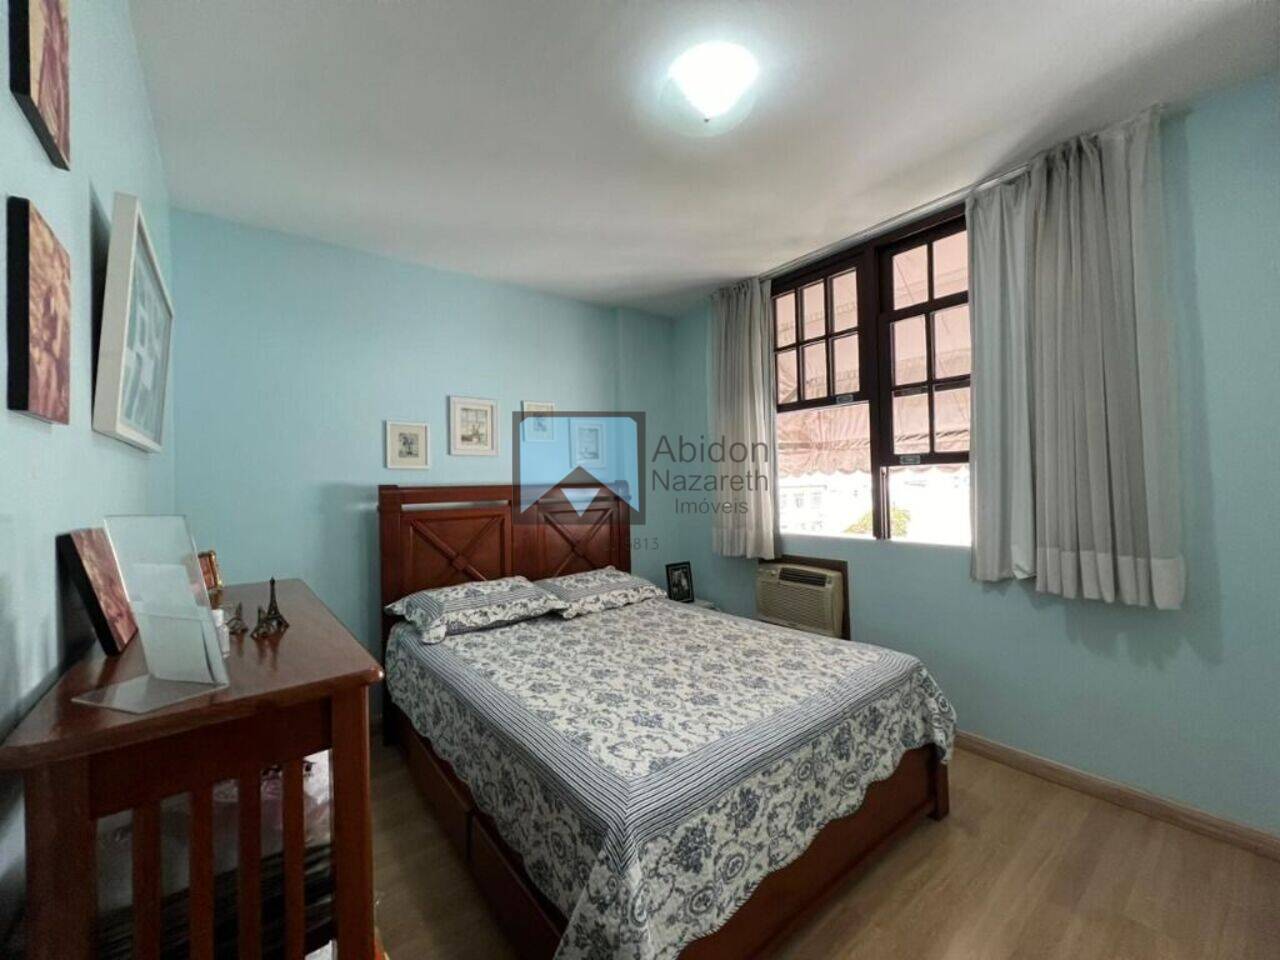 Apartamento Icaraí, Niterói - RJ